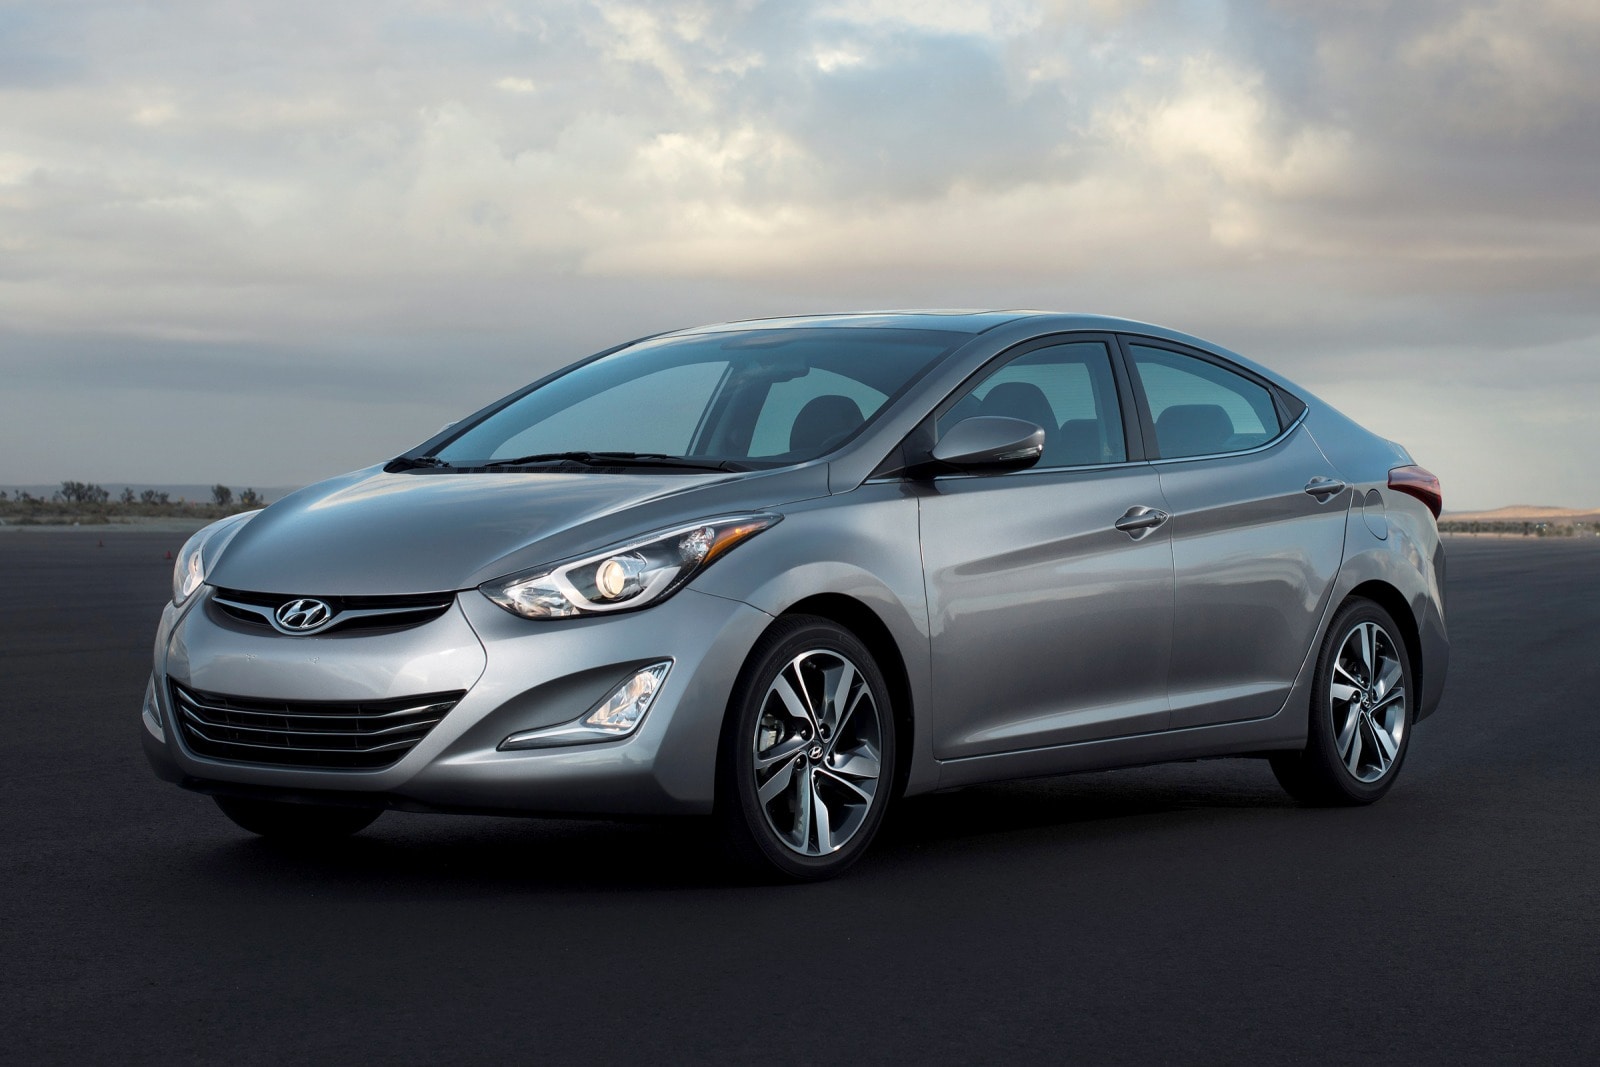 2014 Hyundai Elantra Review & Ratings | Edmunds